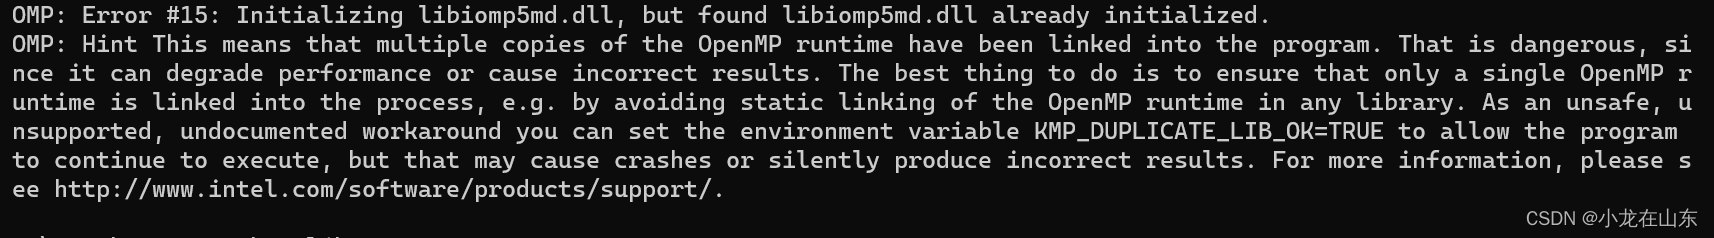 Initializing libiomp5md.dll, but found libiomp5md.dll already initialized._环境变量